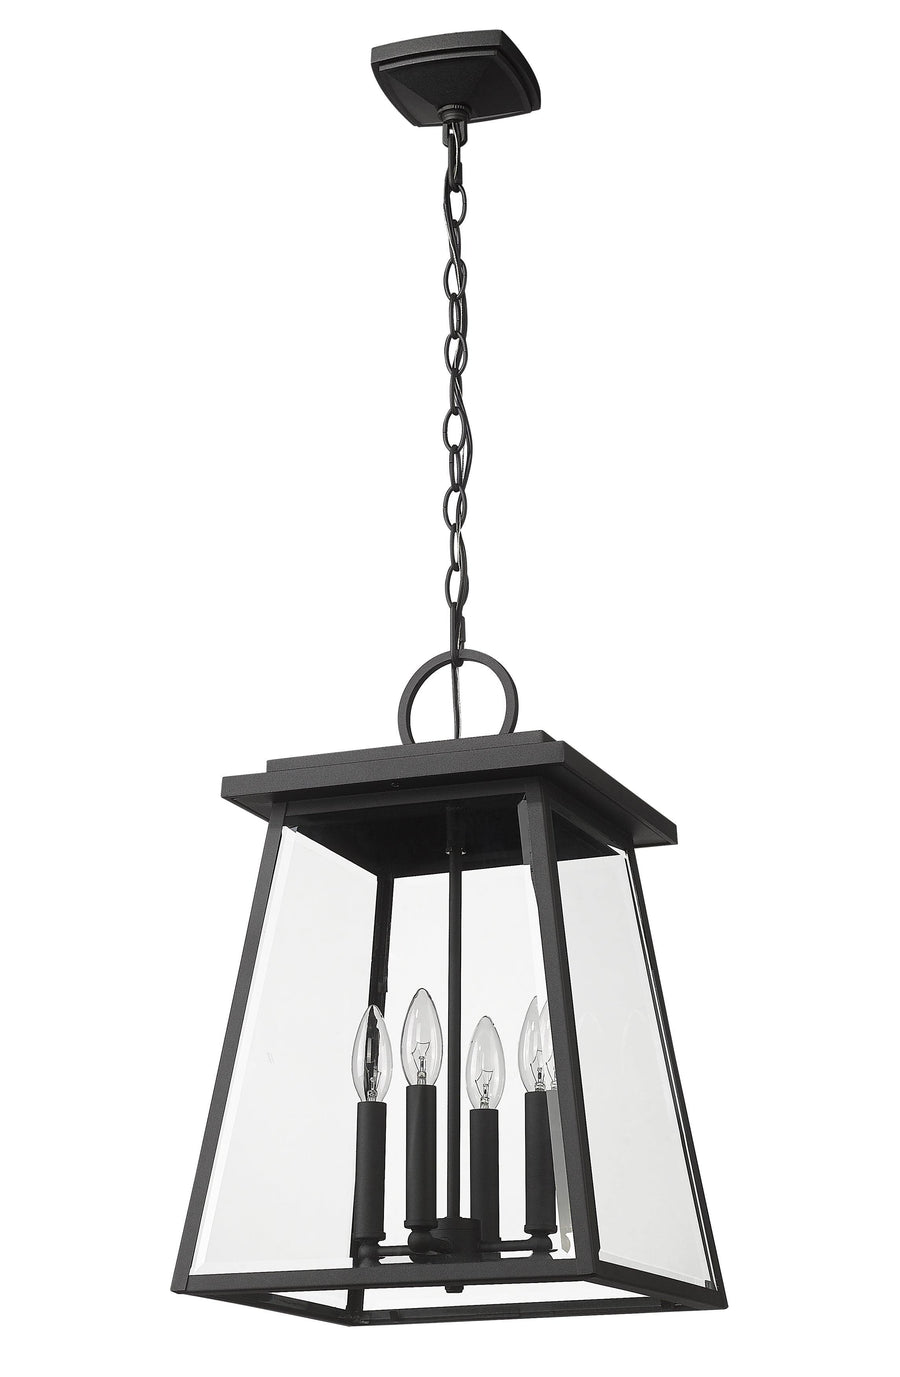 Broughton-4 Light Outdoor Chain Mount Ceiling Fixture - Maison Vogue